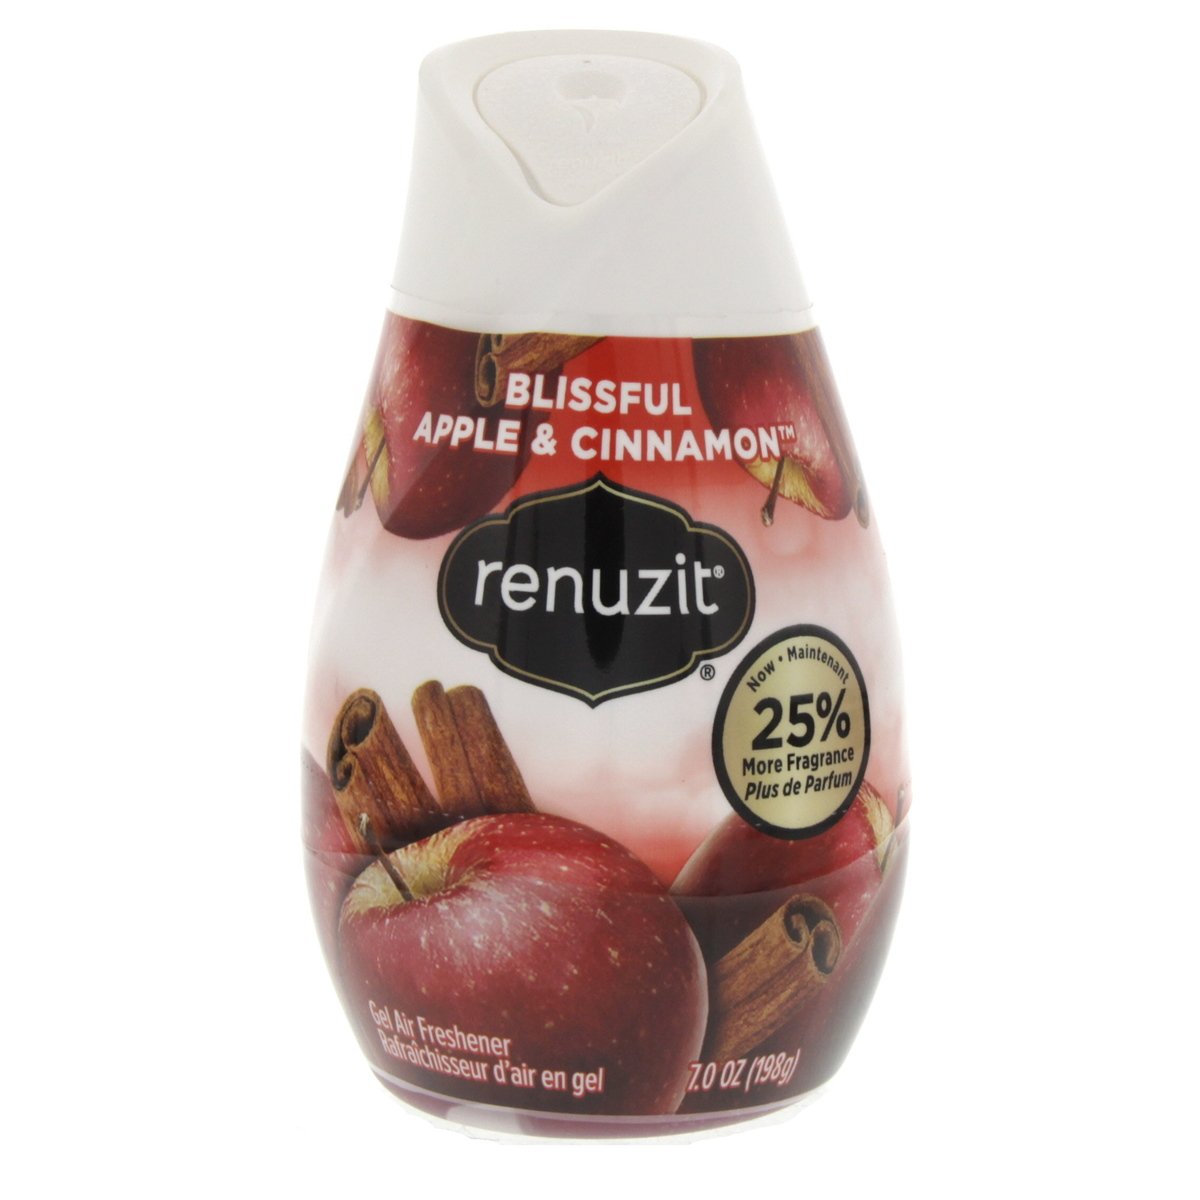 Renuzit Blissful Apple & Cinnamon Air Freshener 198g